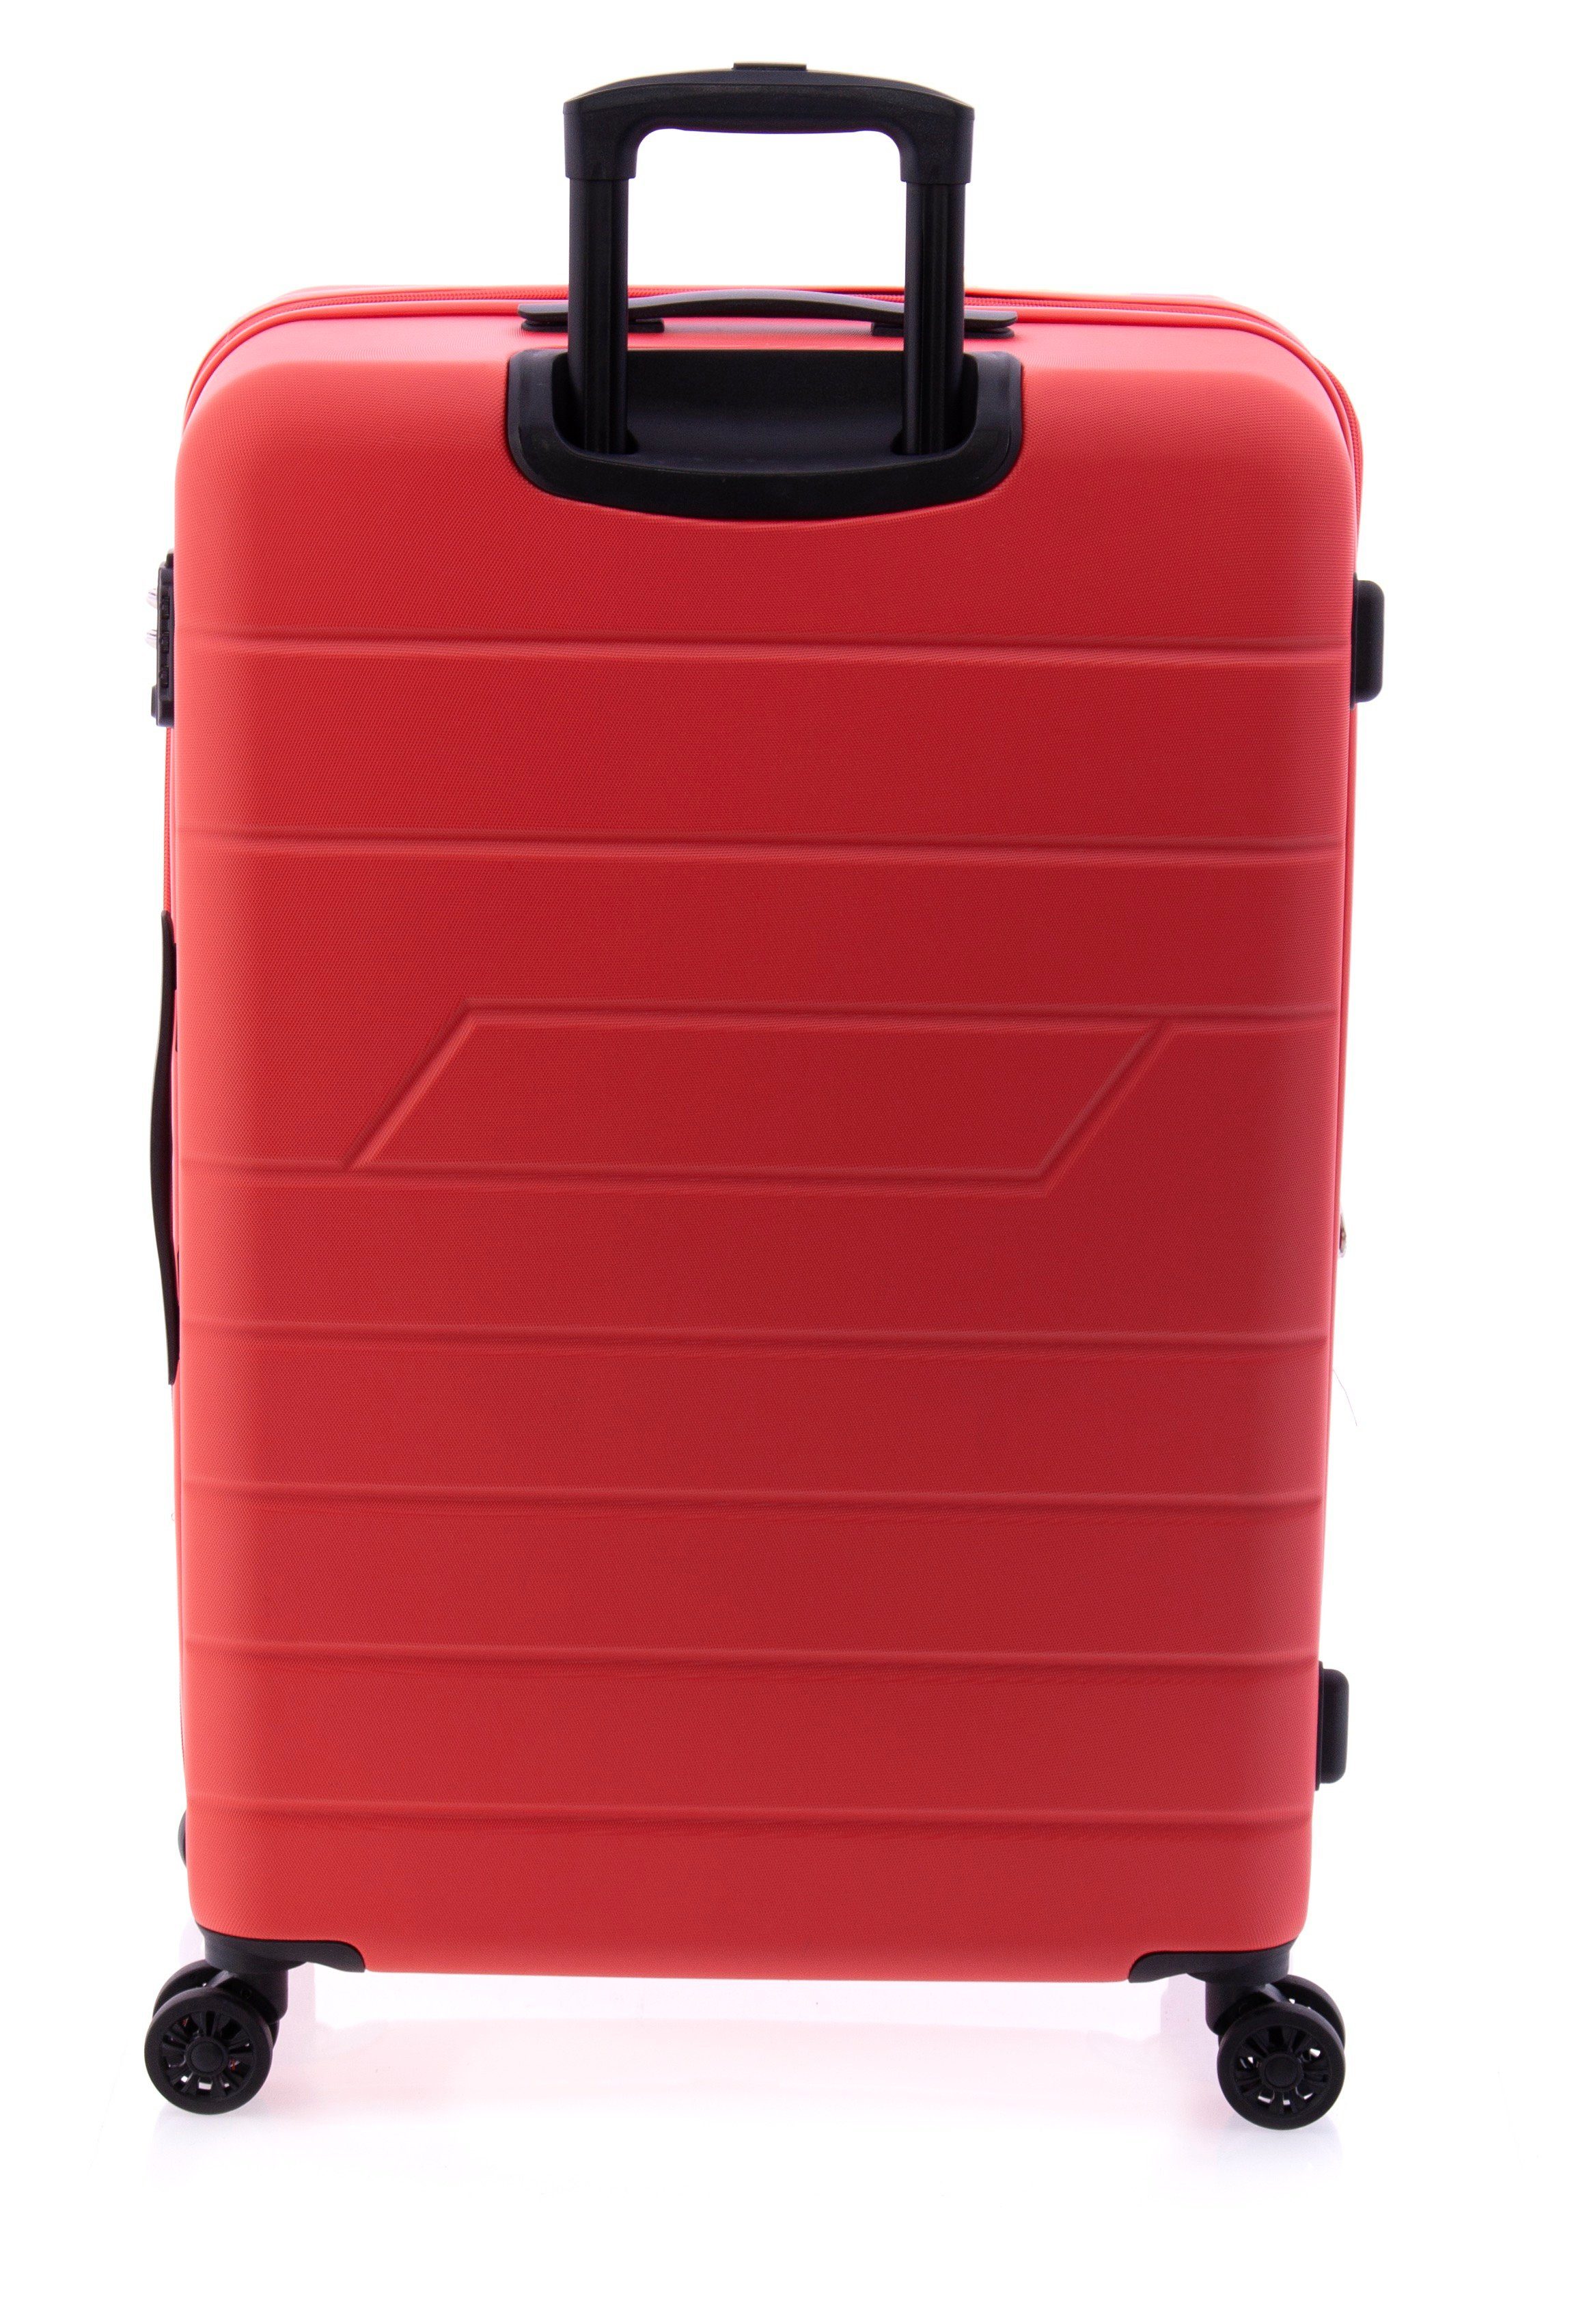 4 75 TSA-Schloss, grün rot, Doppel-Rollen, Koffer cm, Hartschalen-Trolley blau, schwarz, GLADIATOR Farben: Dehnfalte, -